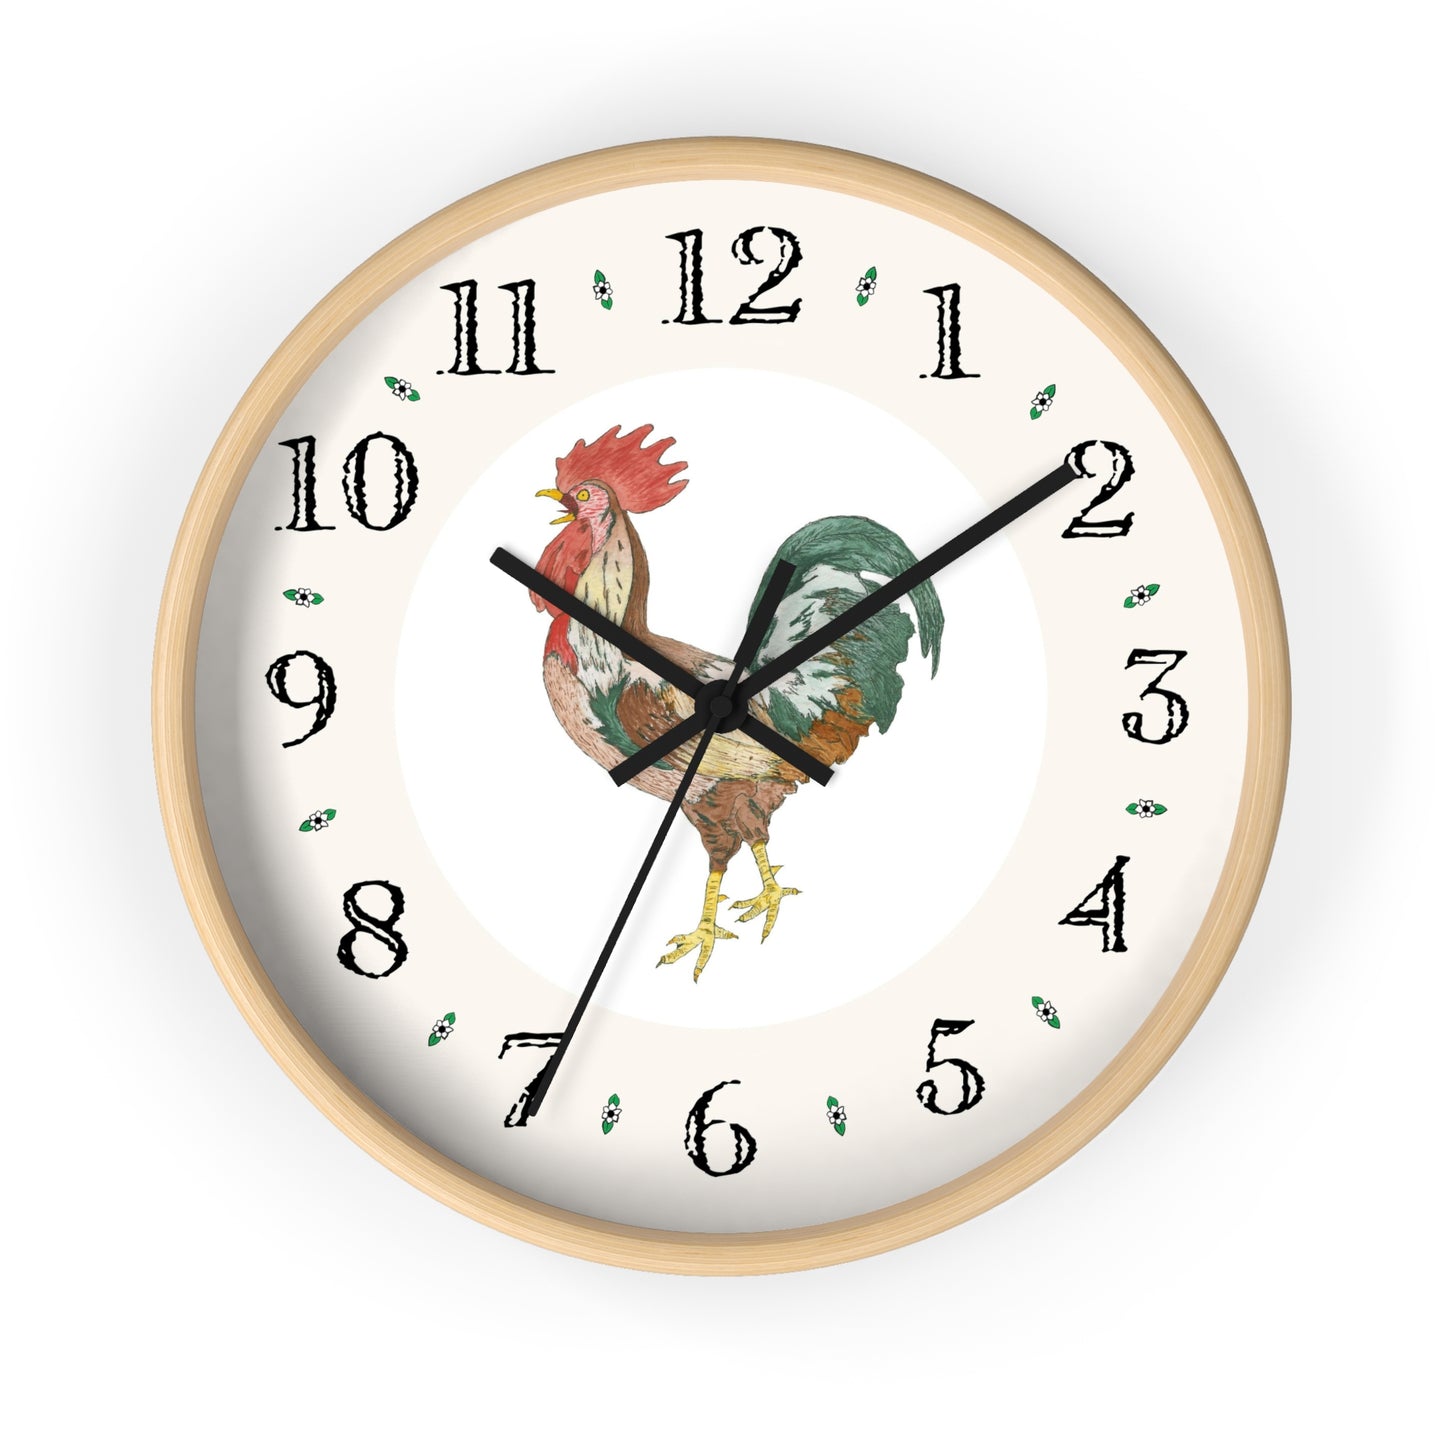 Joseph Rooster Heirloom Designer Clock